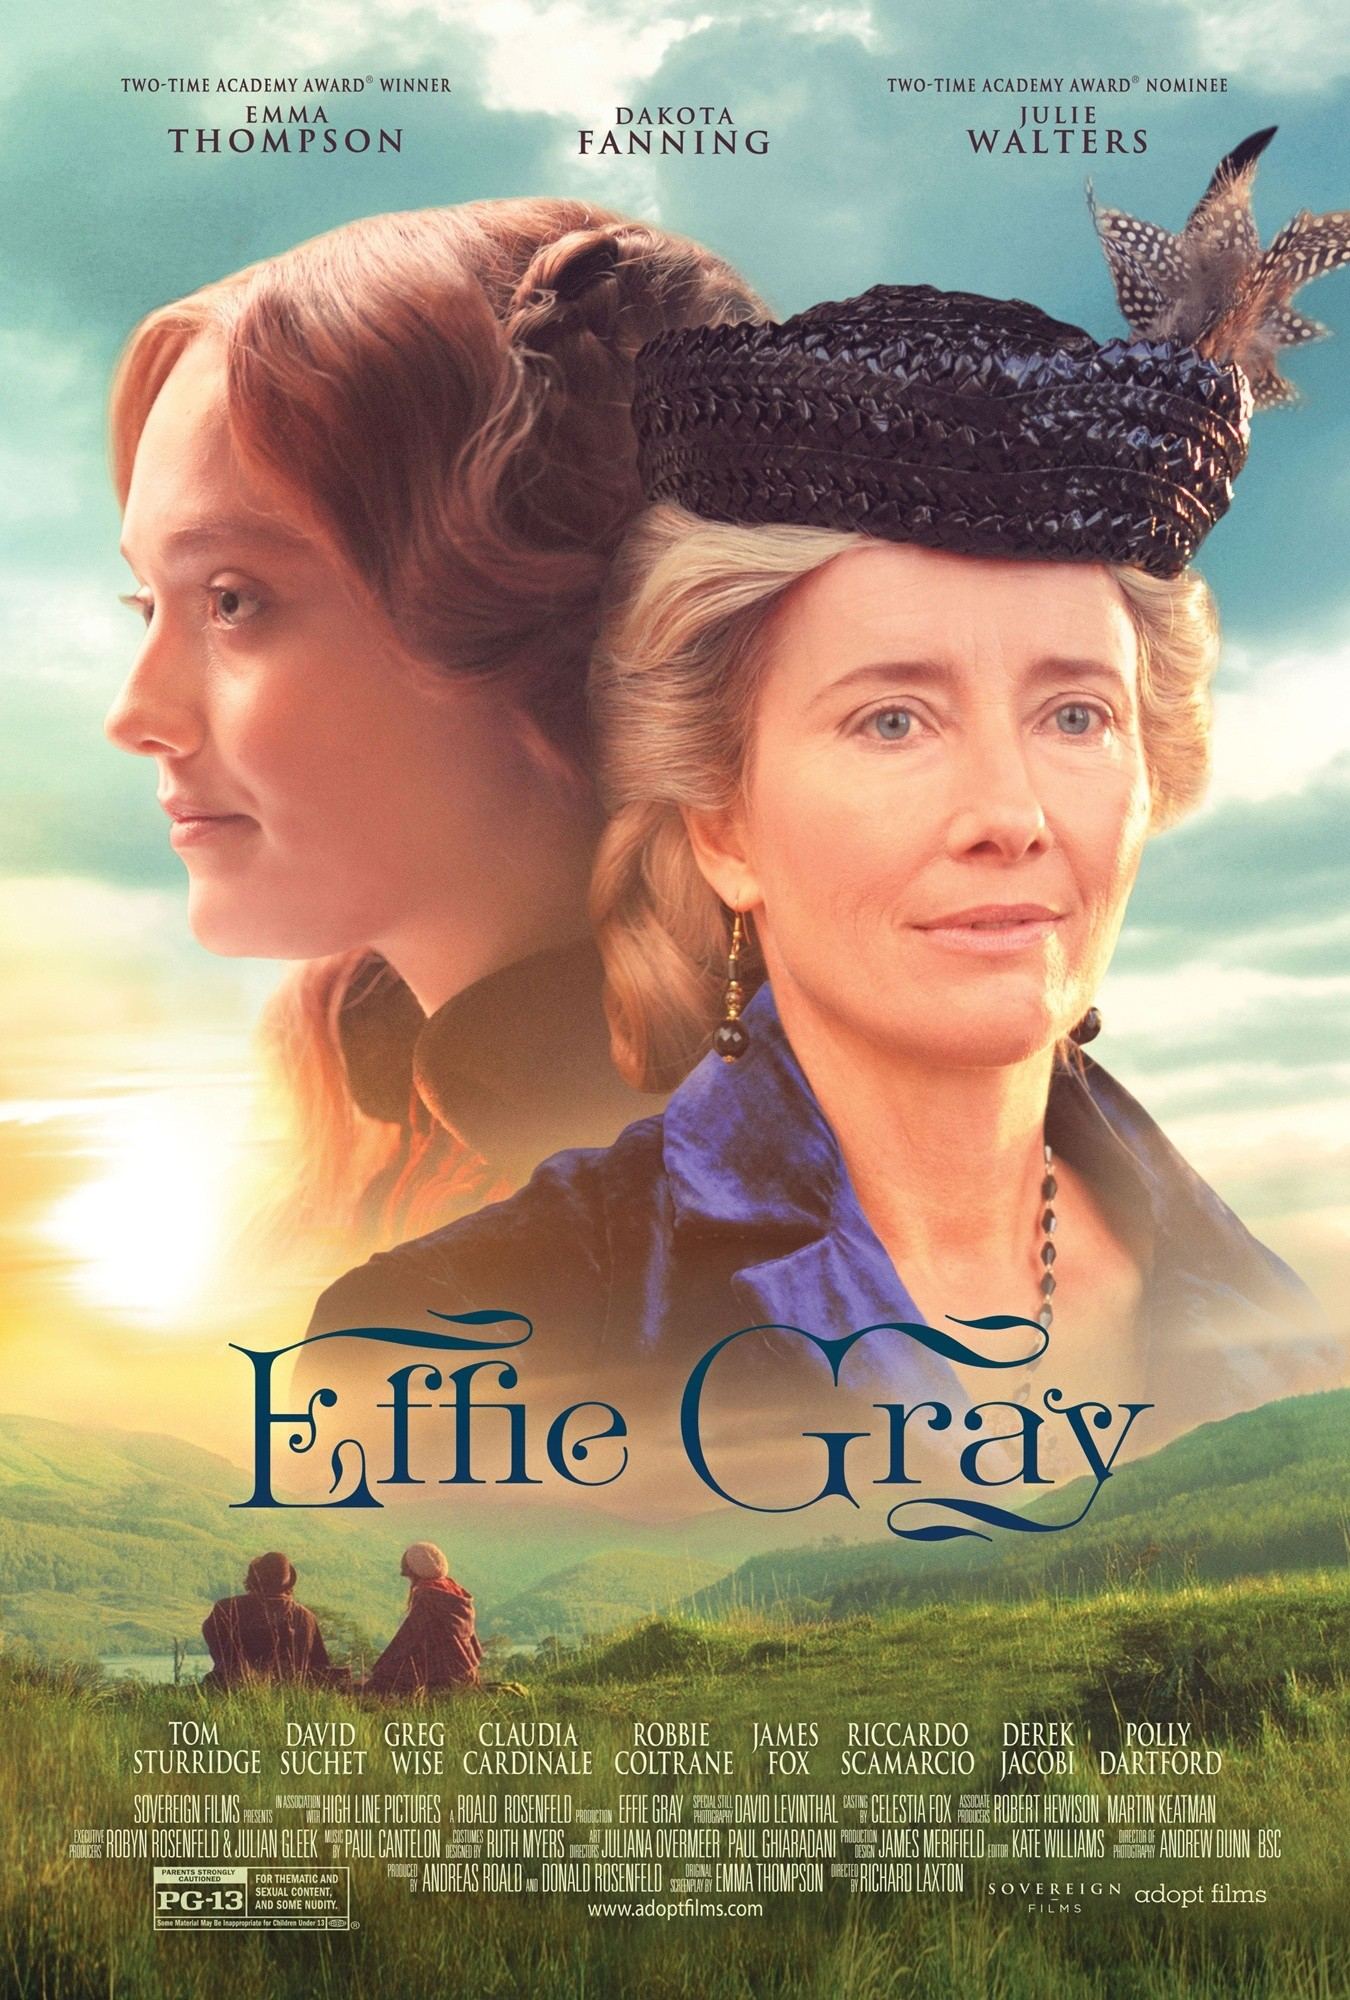 Poster of Adopt Films' Effie Gray (2015)